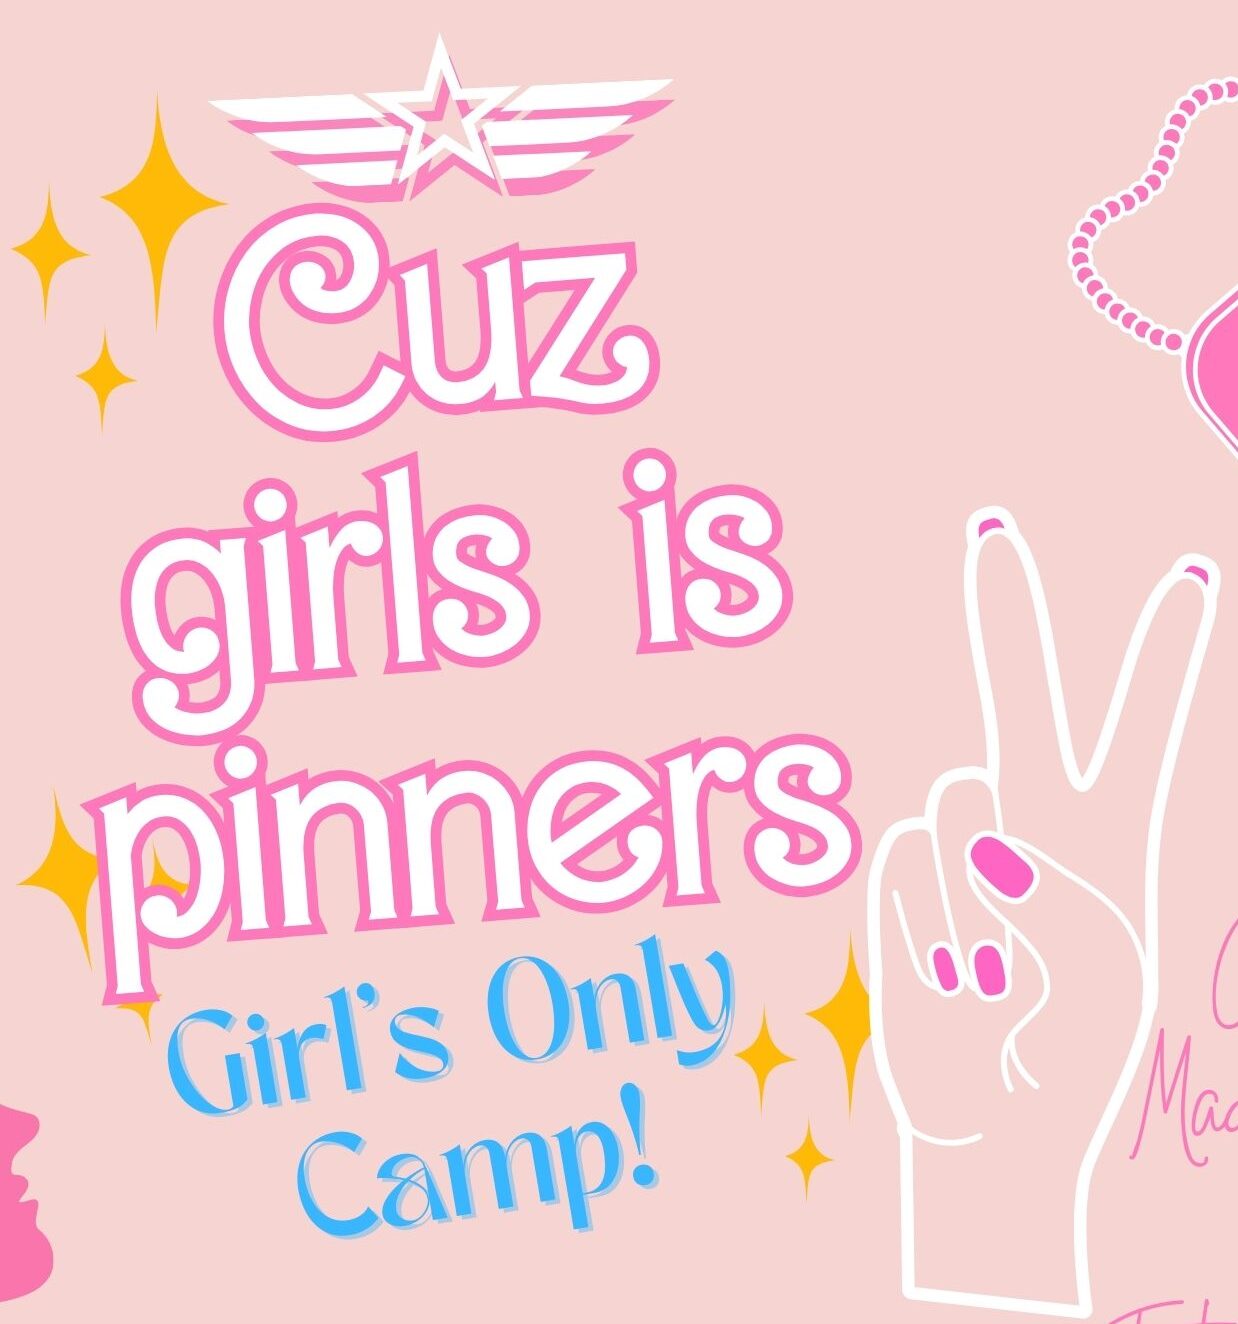 Cuz Girls Is Pinner 2!